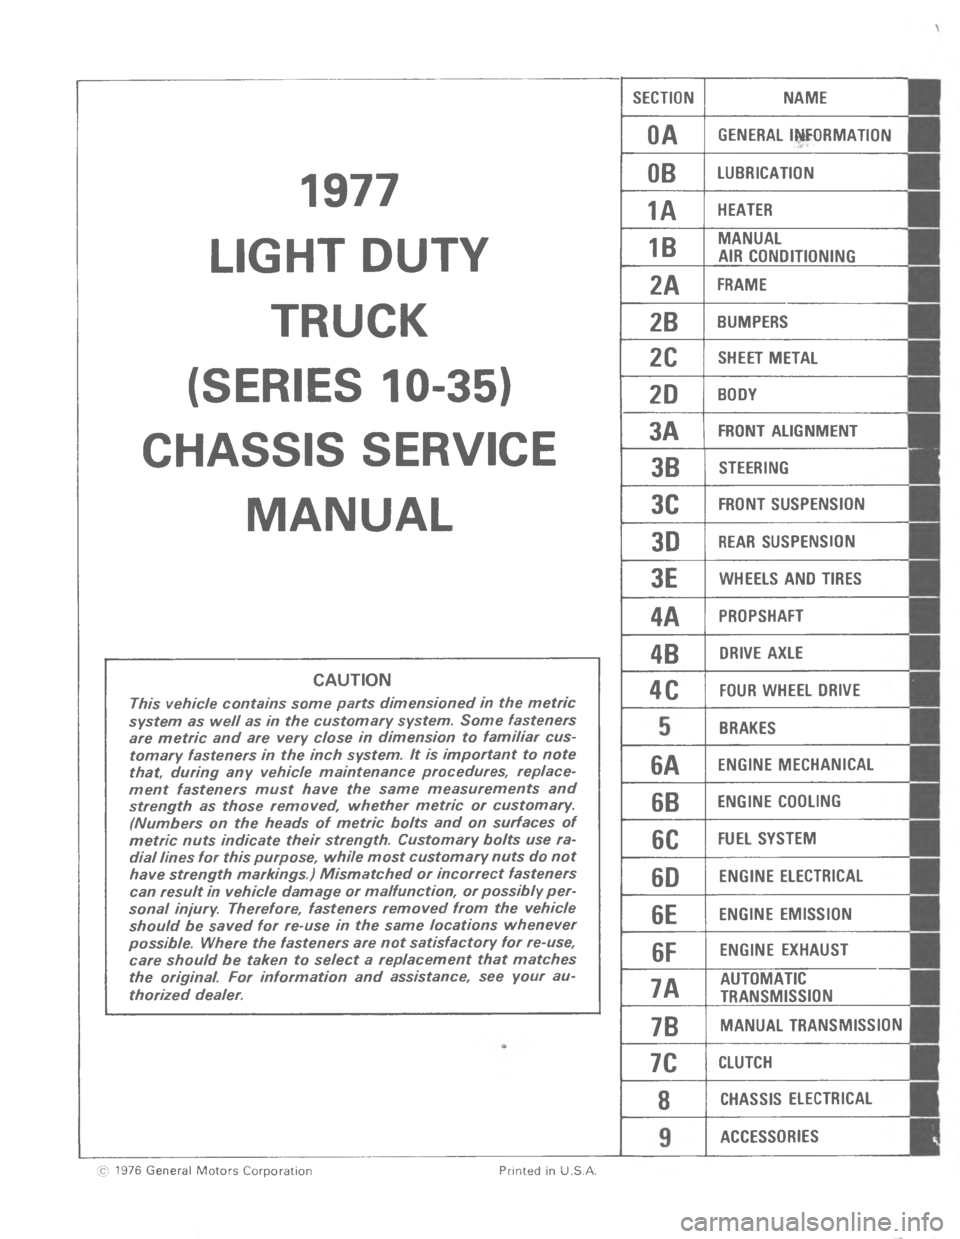 CHEVROLET LIGHT DUTY TRUCK 1977  Service Manual 

	






























	
	
	
	
	




































